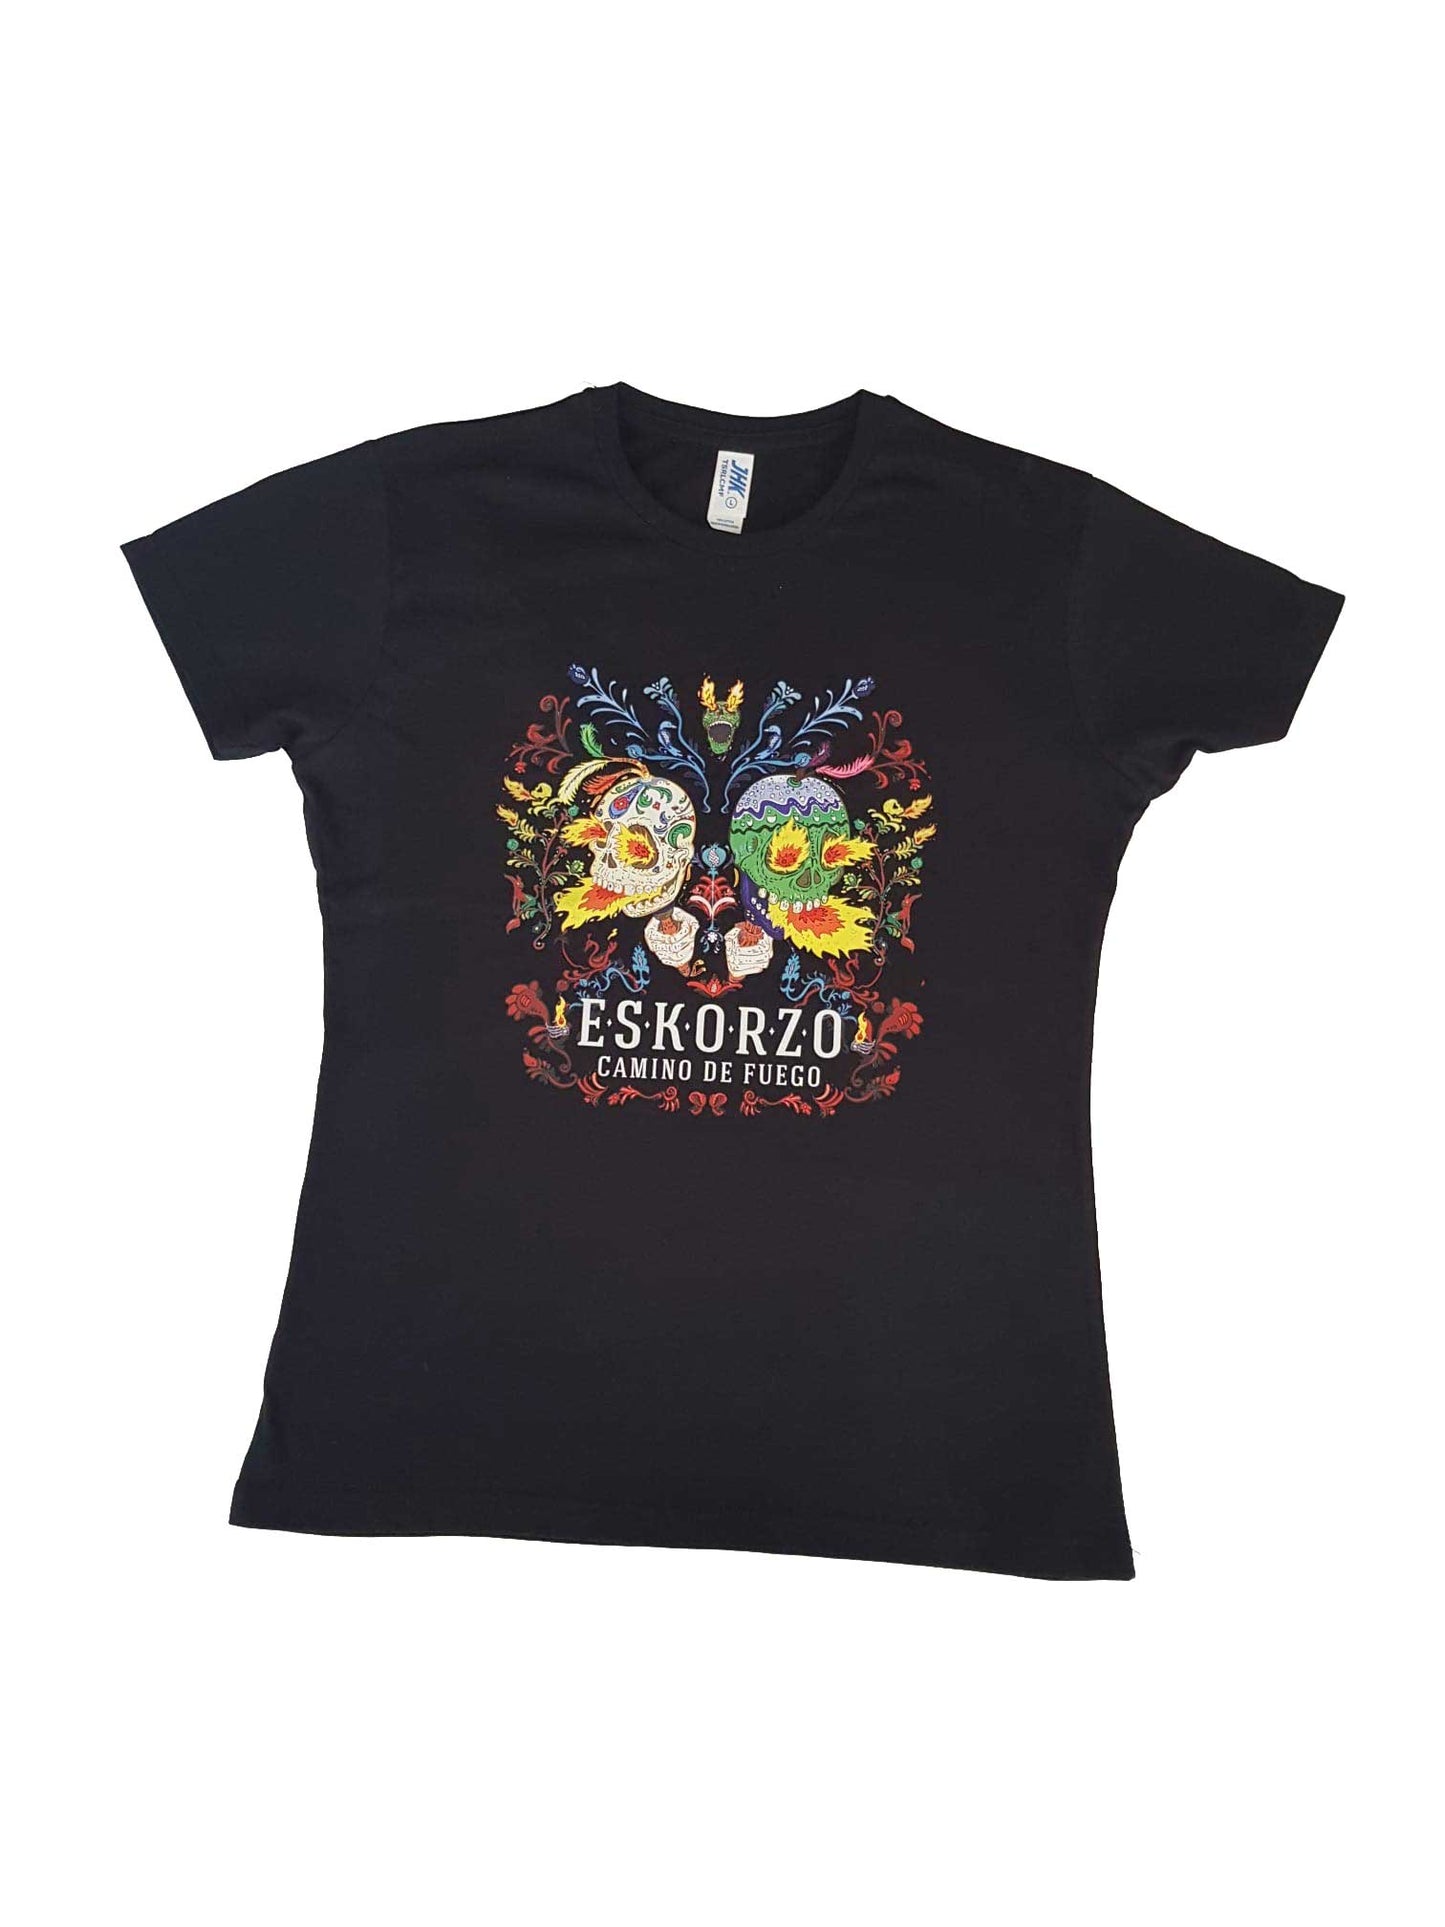 Eskorzo Camino de Fuego - Camiseta Unisex Negra